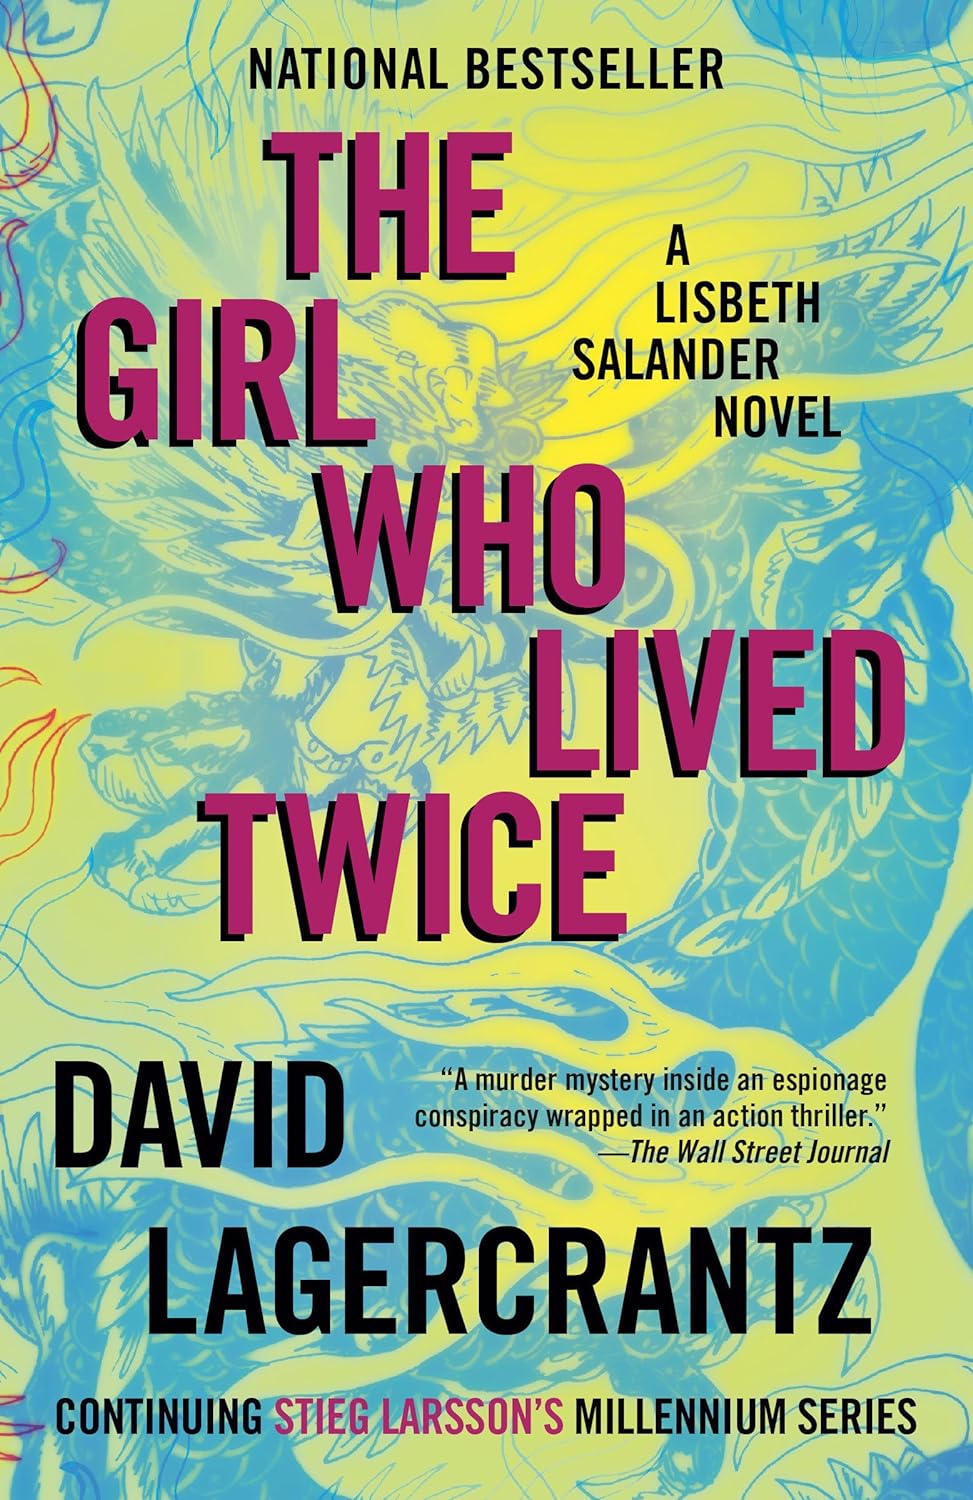 The Girl Who Lived Twice: A Lisbeth Salander Novel - by David Lagercrantz